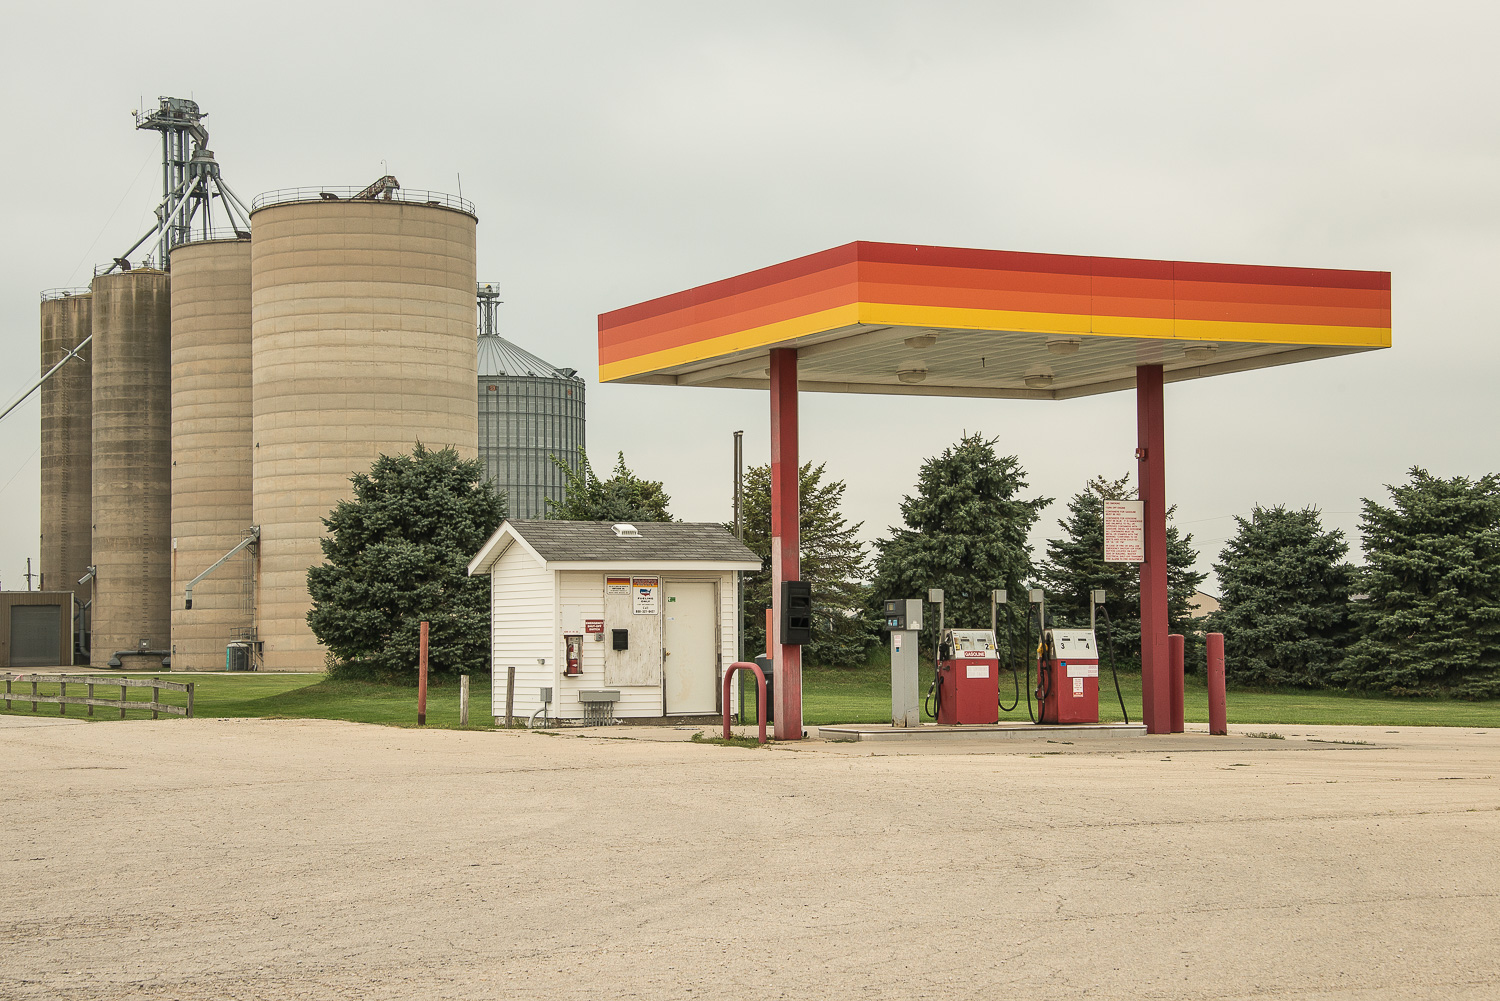 Gas Station, Clinton, Illinois, 2013